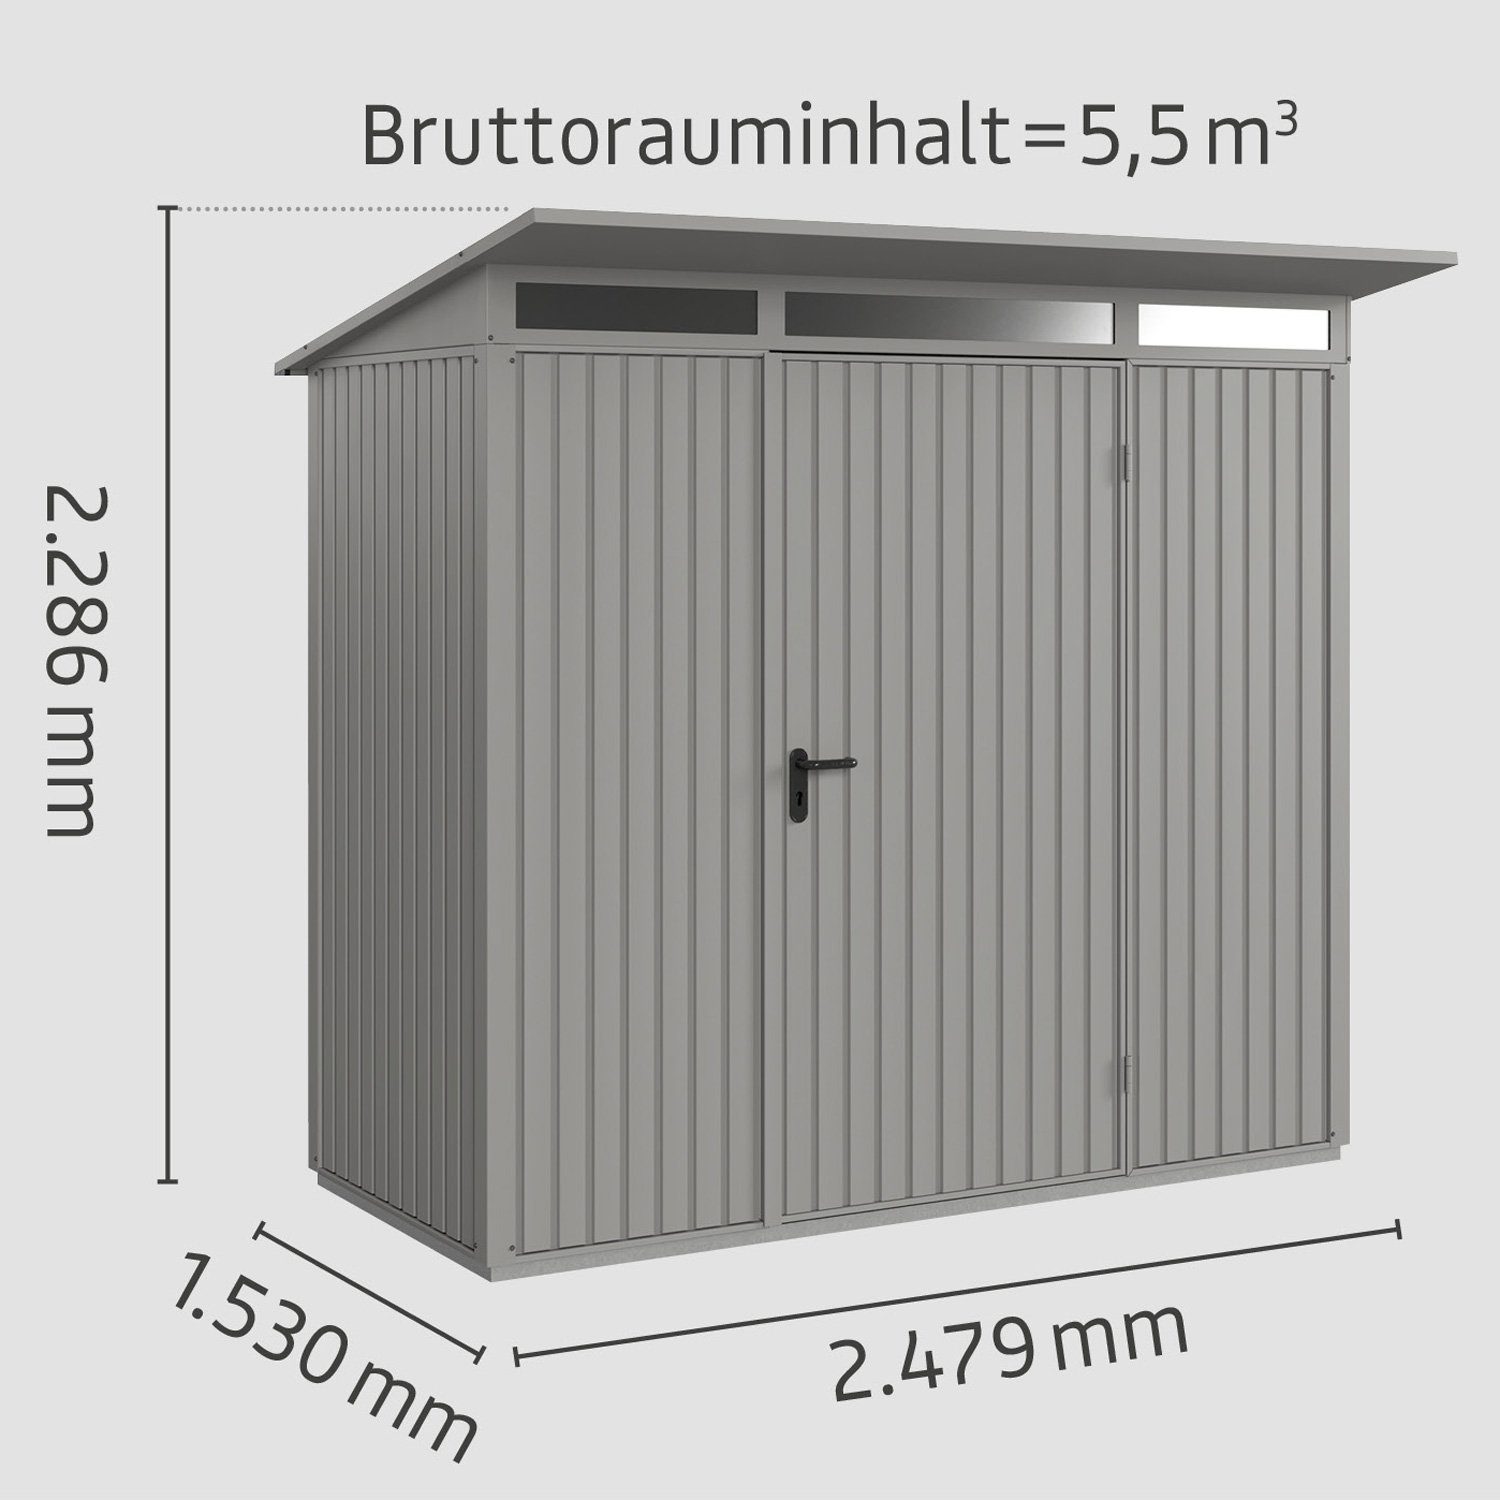 1-flüglige Tür Hörmann Metall-Gerätehaus Typ 1, graualuminium Gerätehaus Trend Ecostar mit Pultdach